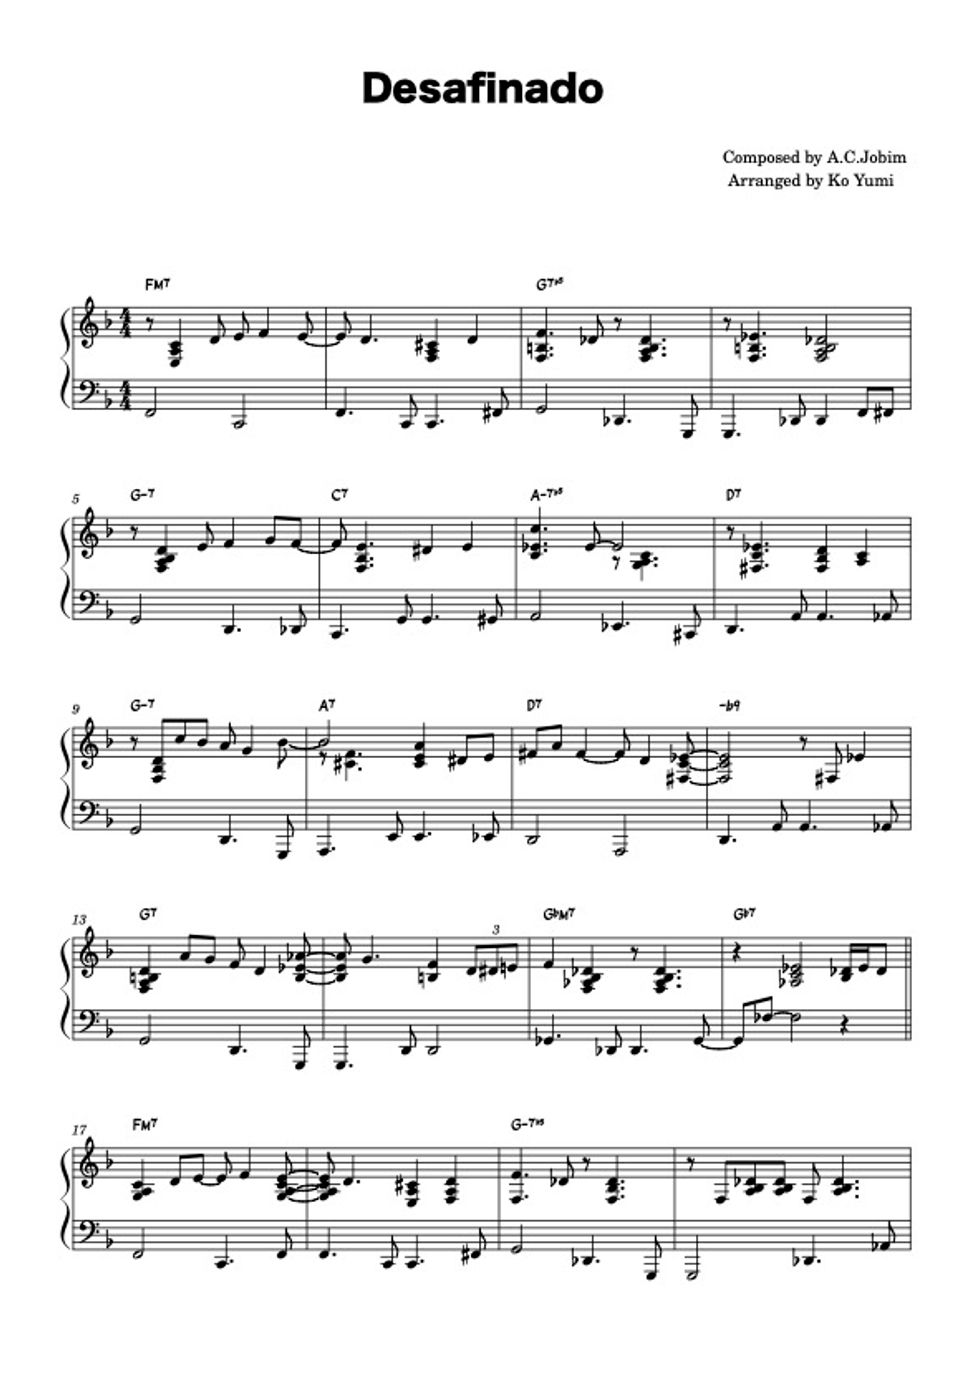 A.C.Jobim - Desafinado (Bossa Nova Solo Piano) by KoYumi Music